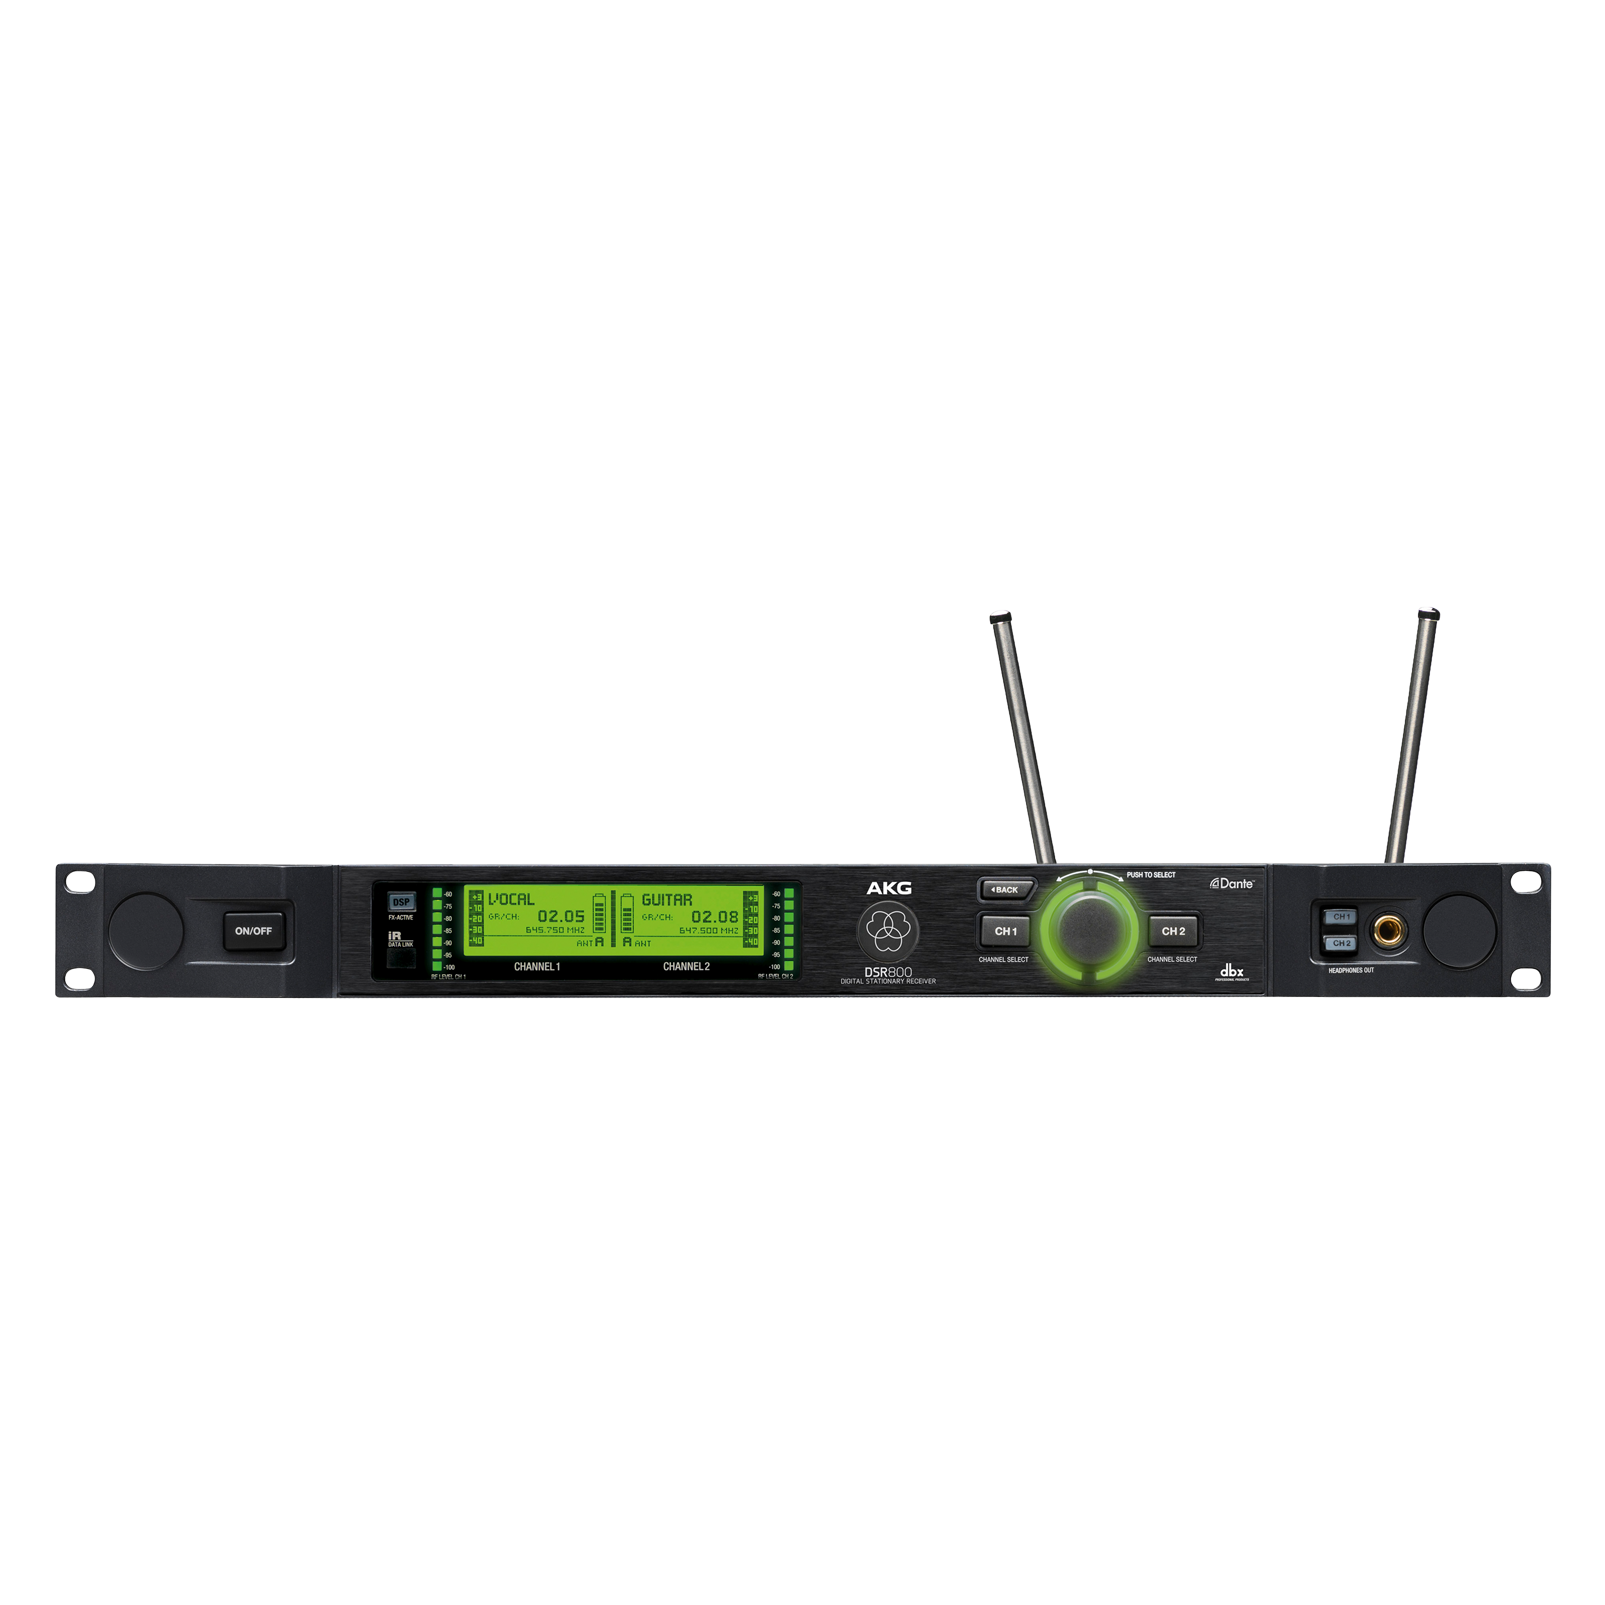 DSR800 Band1 (B-Stock) - Black - Reference digital wireless stationary receiver - Hero